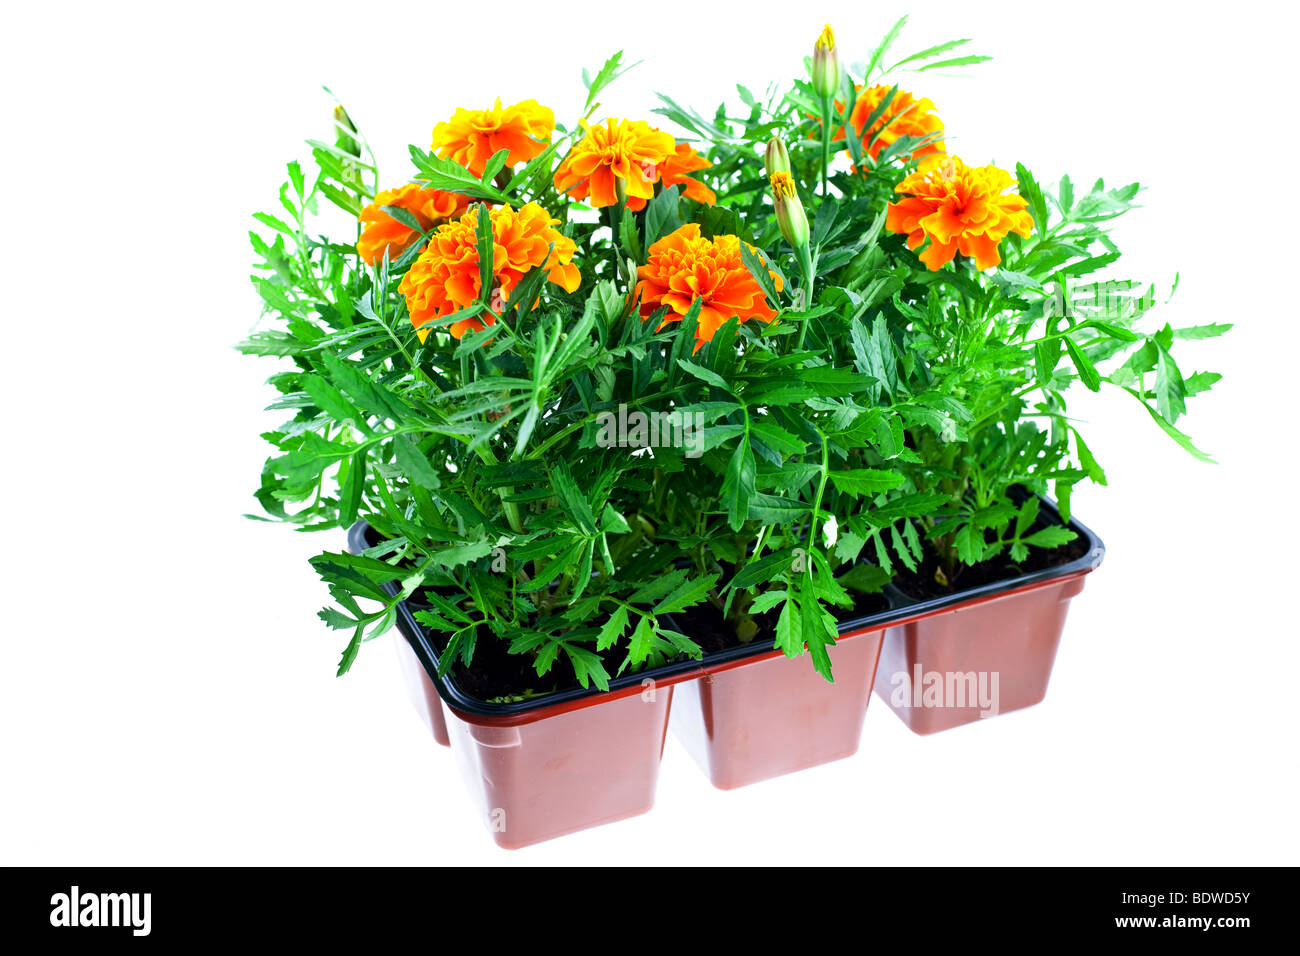 bright orange marigolds in plastic pots on a white background Stock Photo